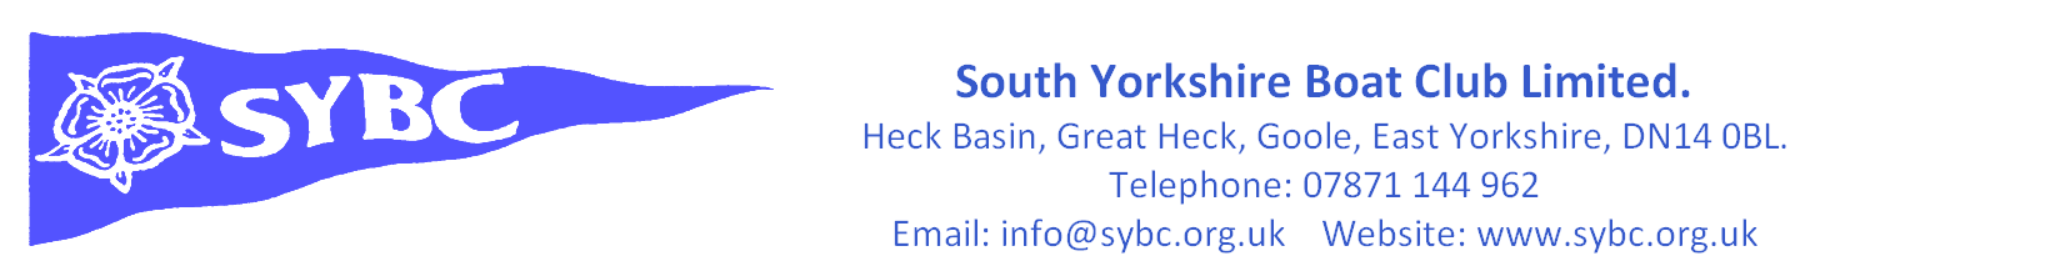 South Yorkshire Boat Club